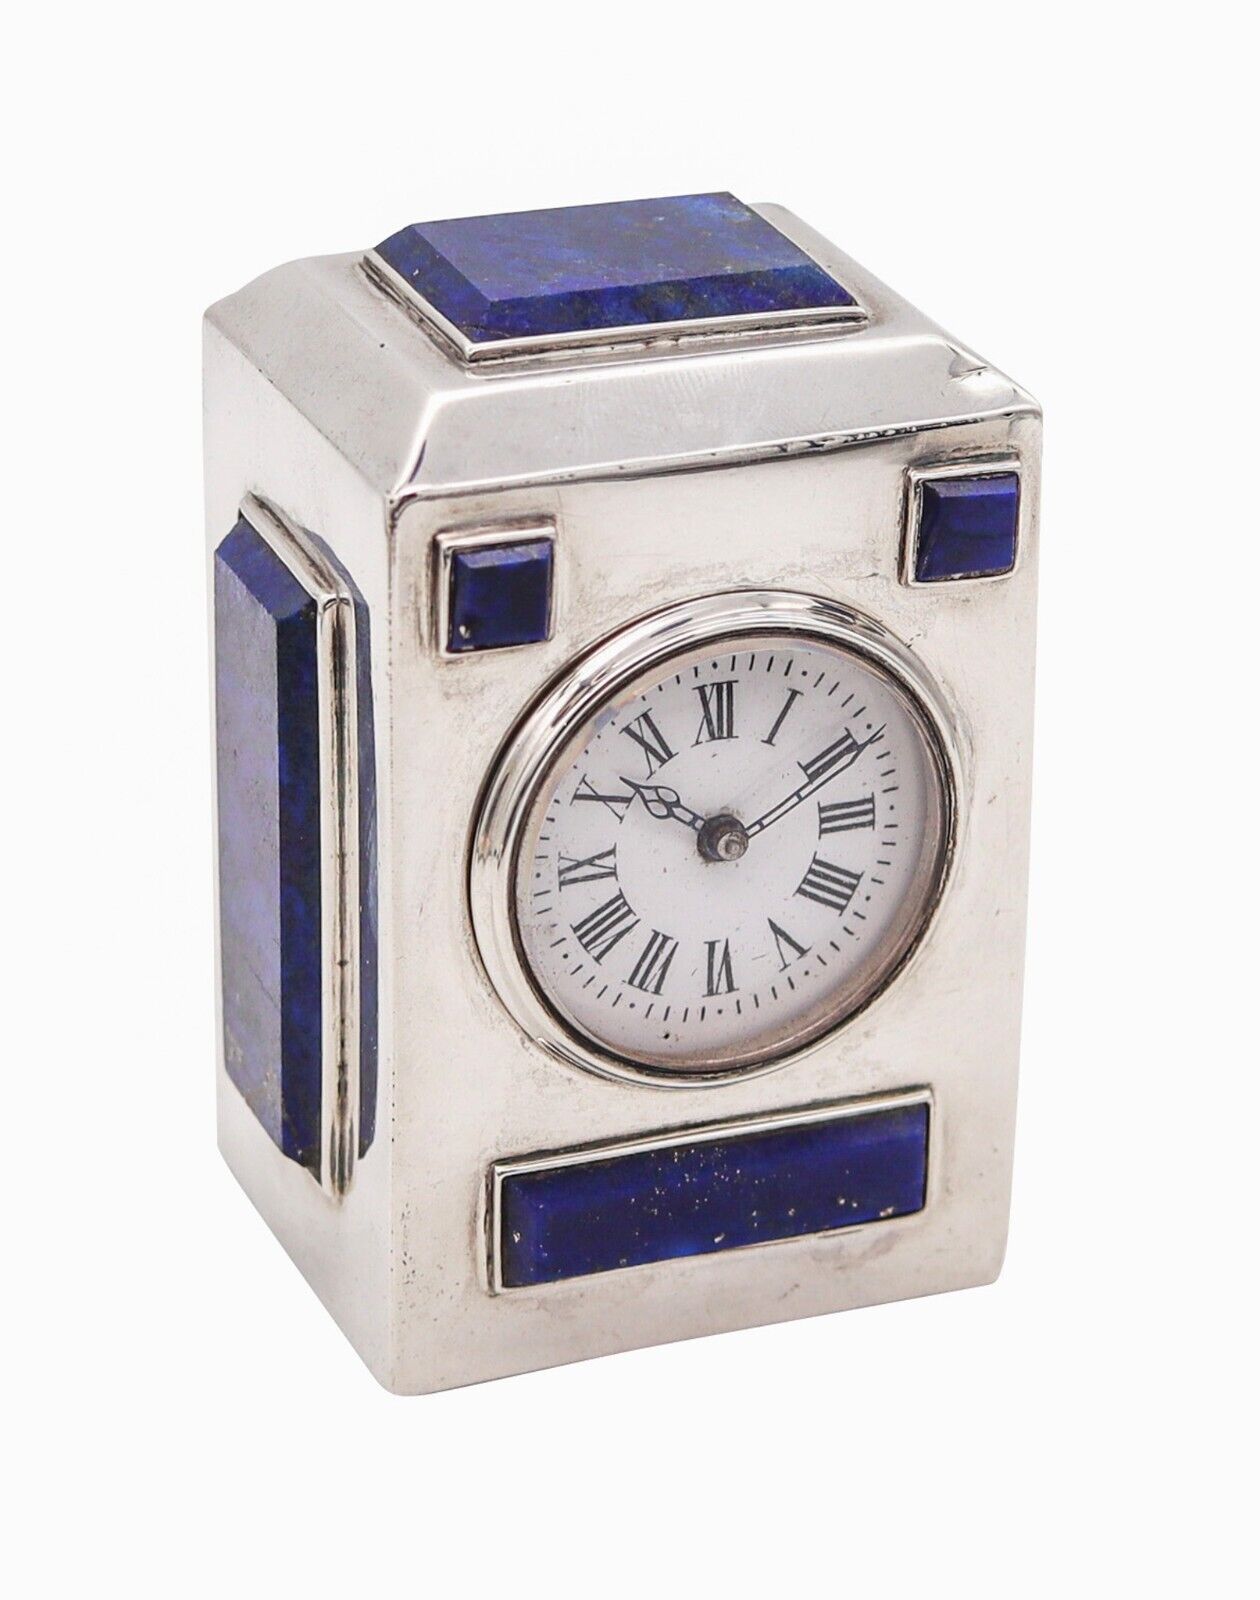 Asprey 1895 London Desk Travel Clock in .925 sterling silver With Lapis Lazuli